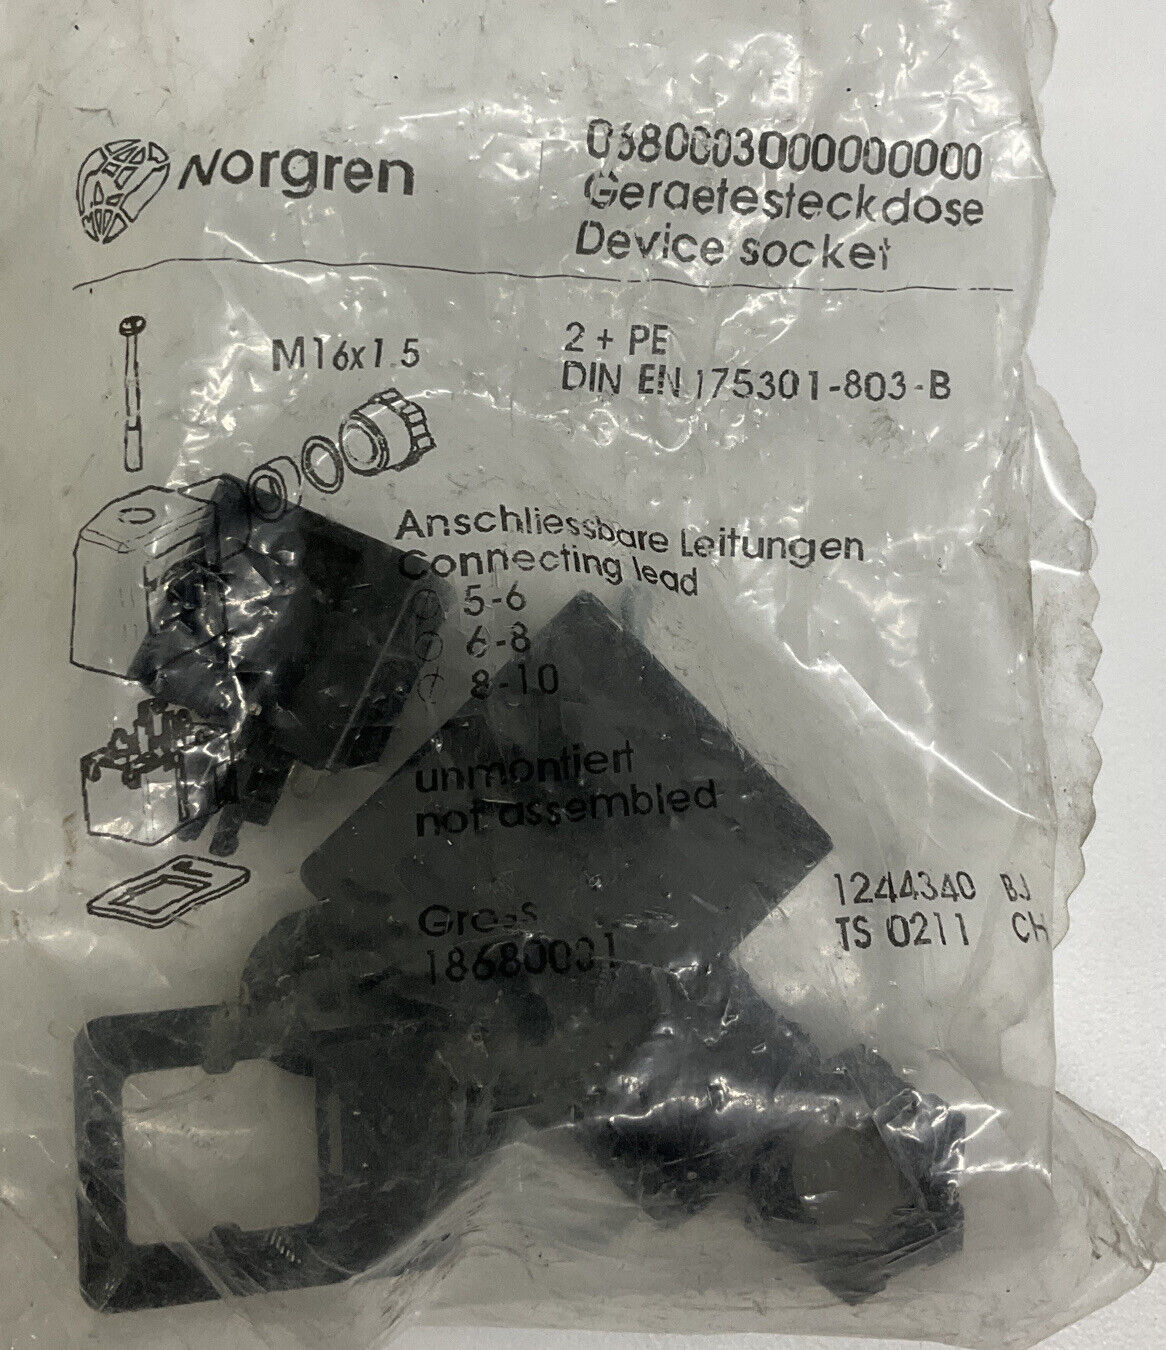 Norgren 1258133 Device Socket 2+PE 250VAC 10 AMP(YE243) - 0